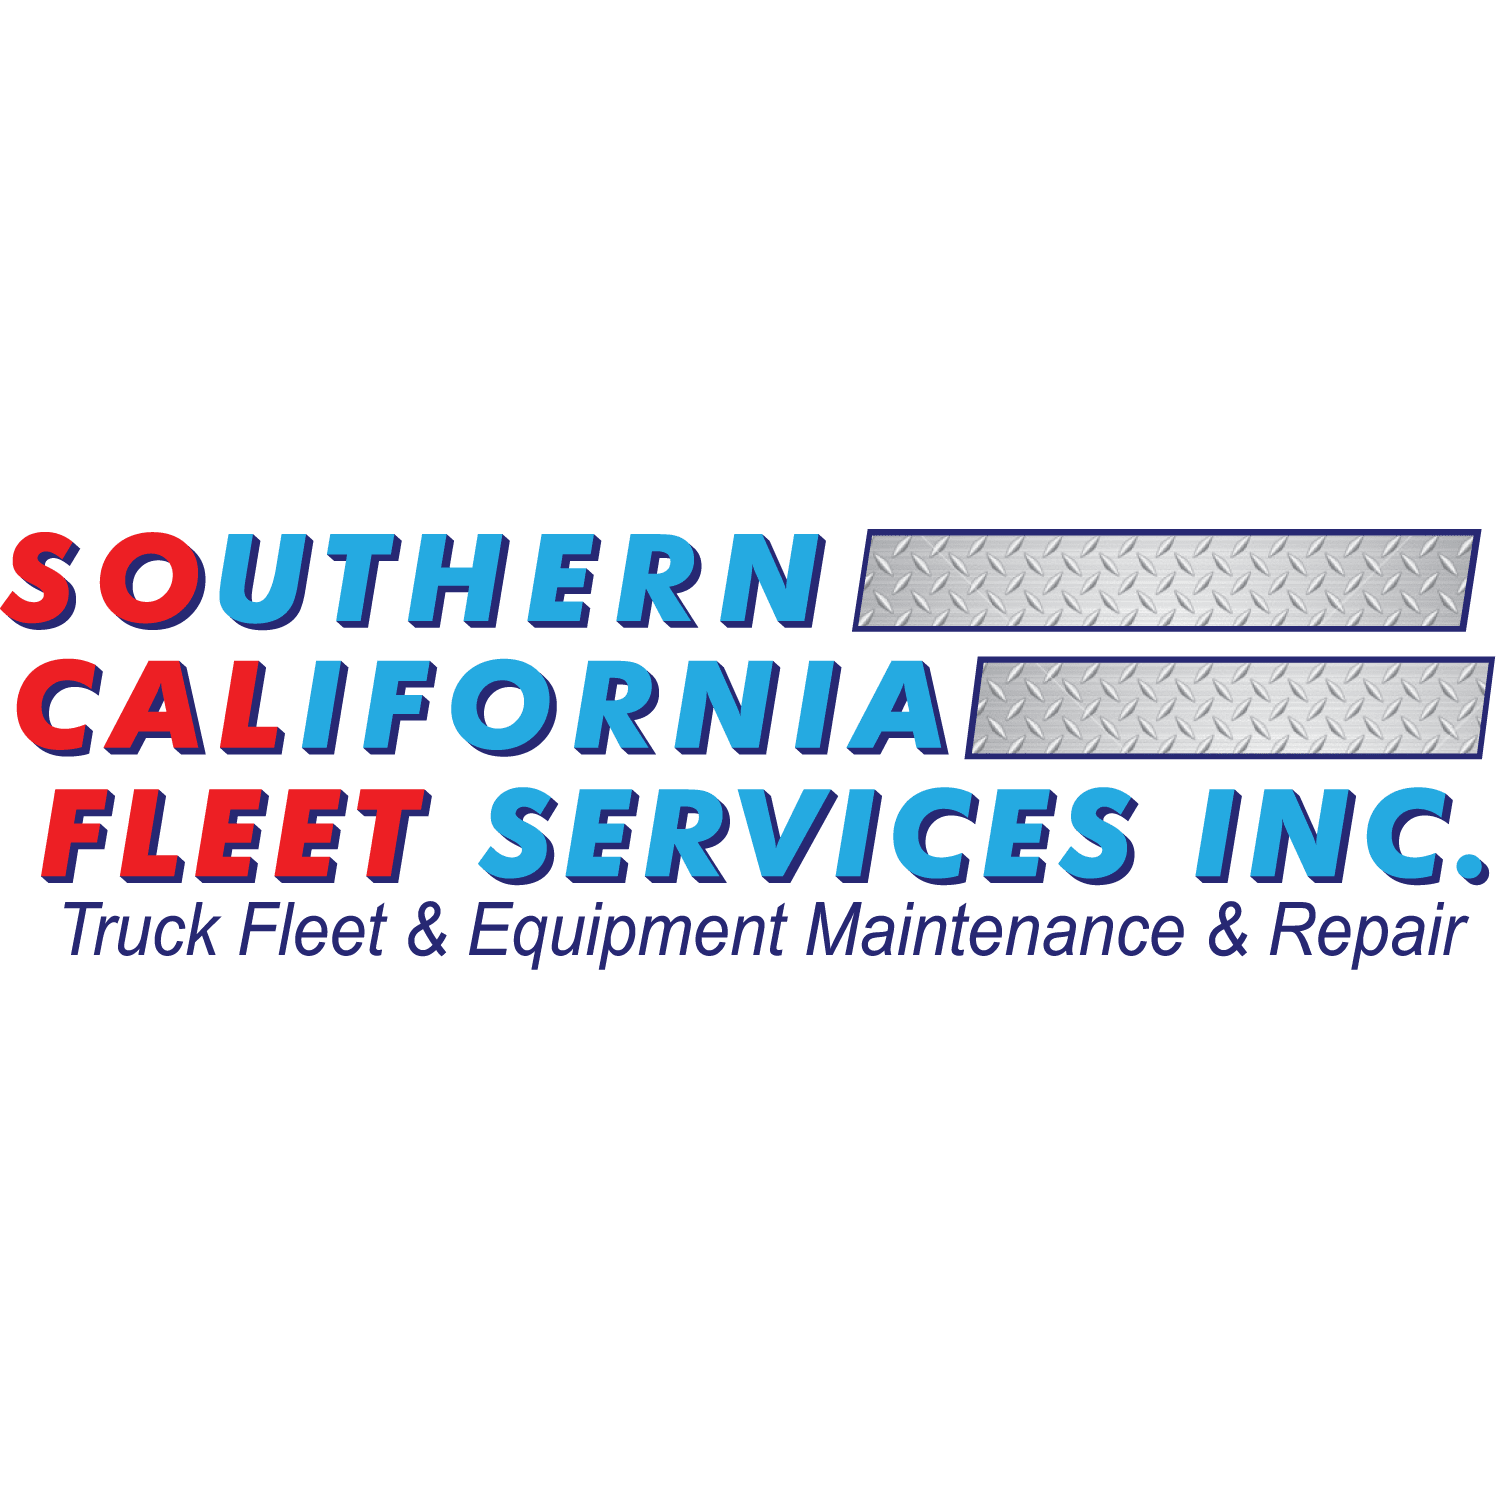 Southern California Fleet Services INC.